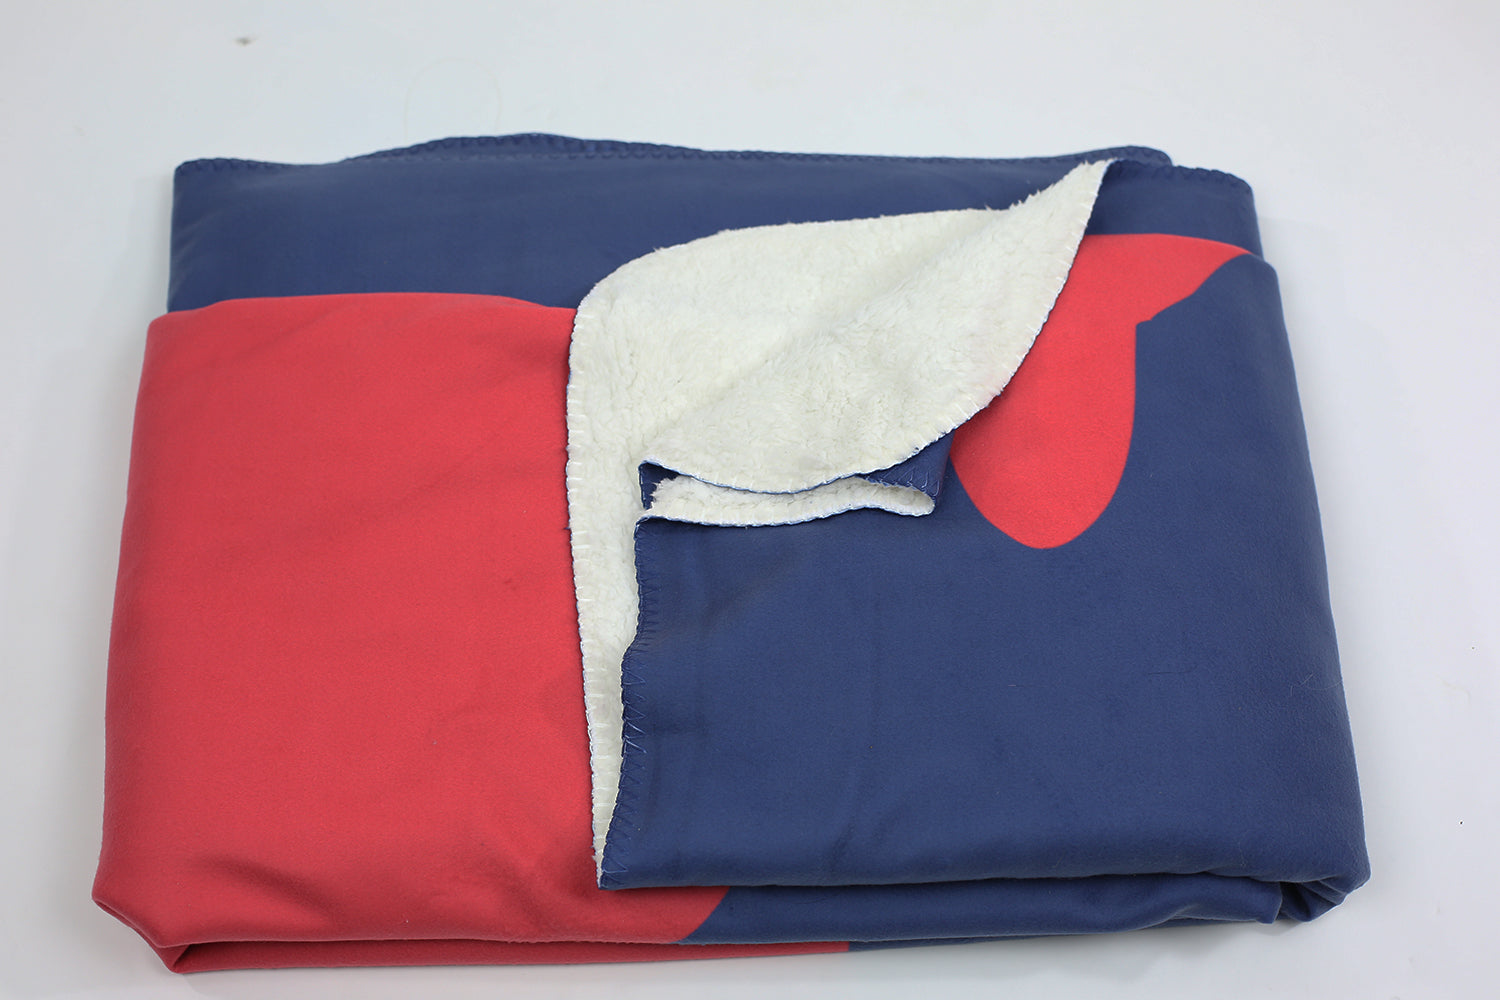 Martha's Vineyard Fleece Blanket - Red on Navy - SummerTies